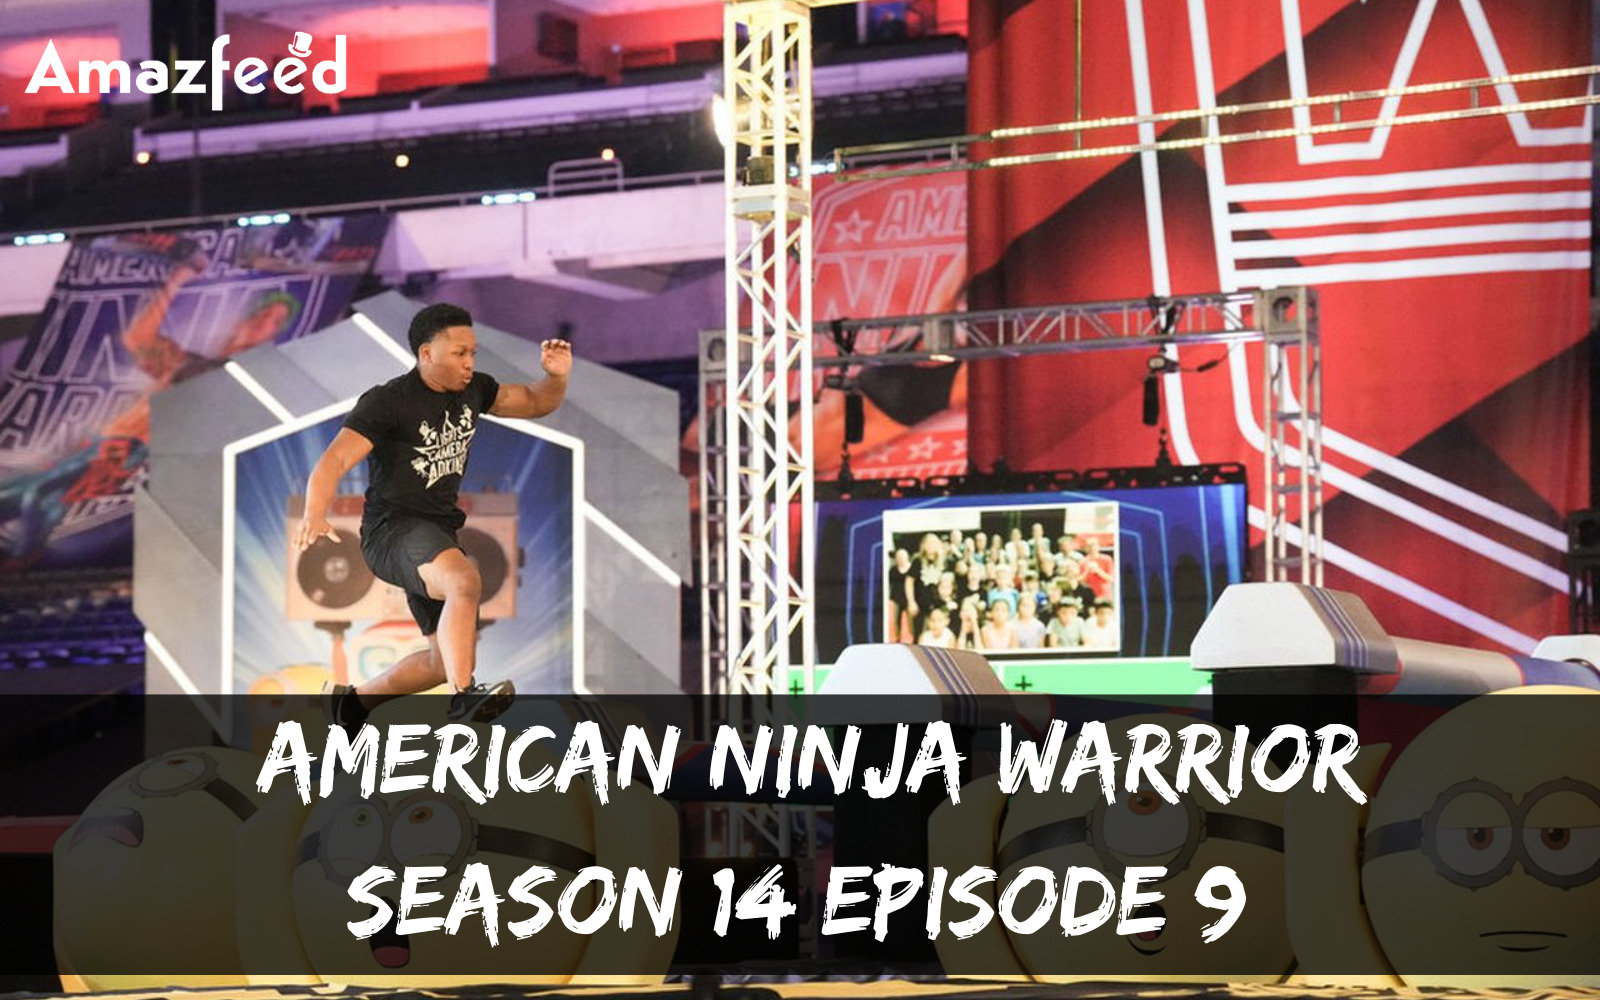 American Ninja Warrior Season 14 Episode 9 release date